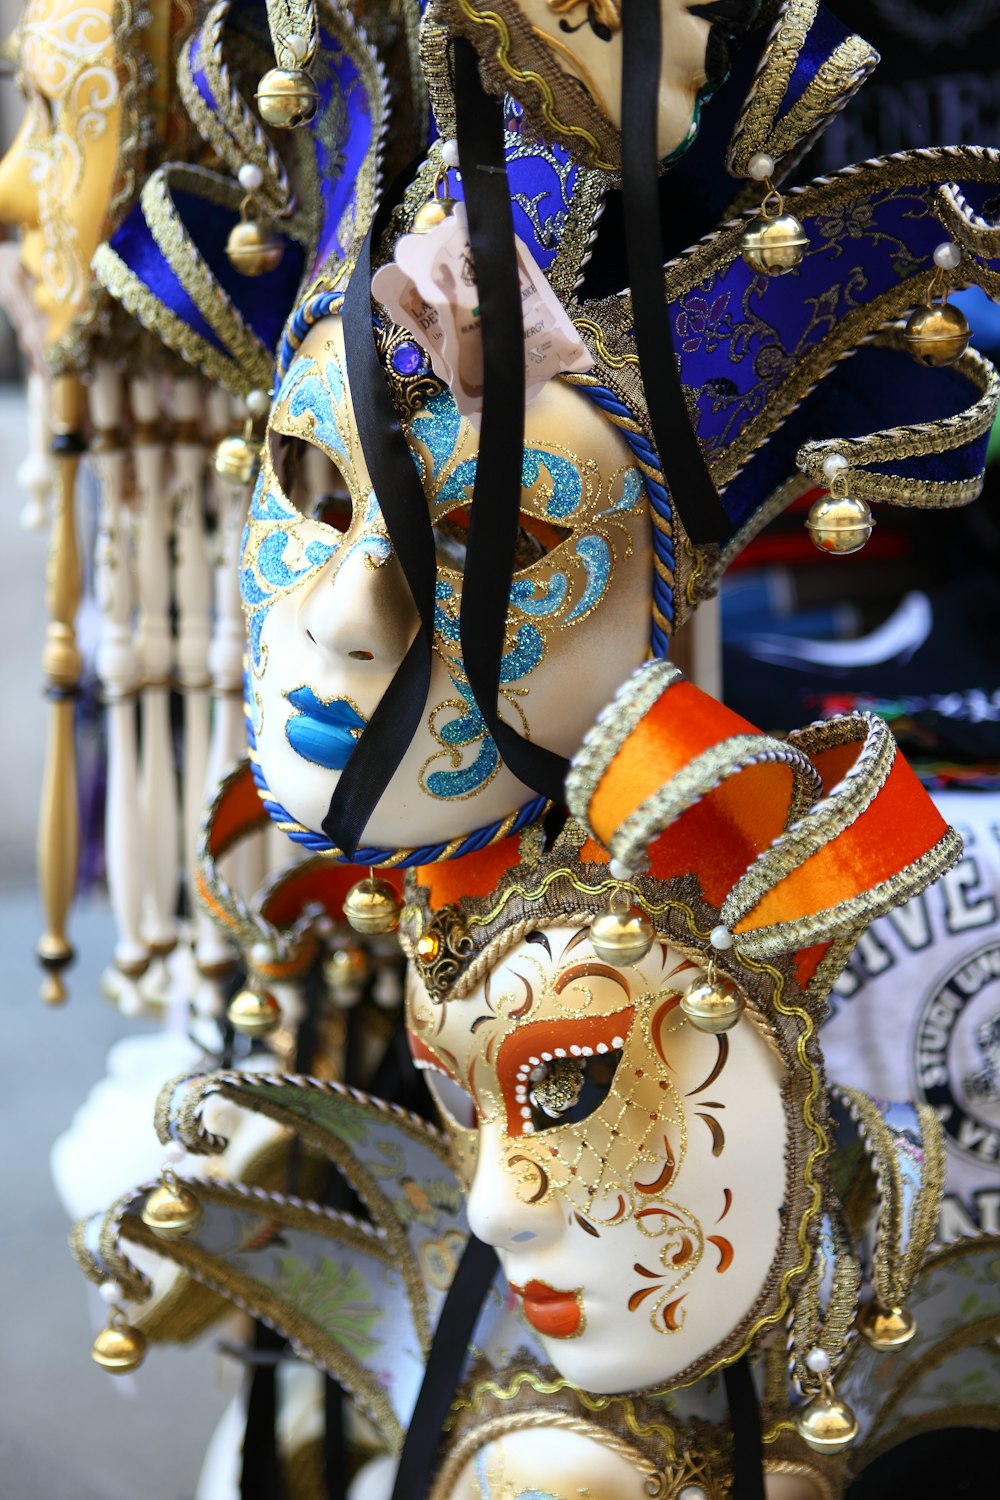 jester masquerade masks displayed along road